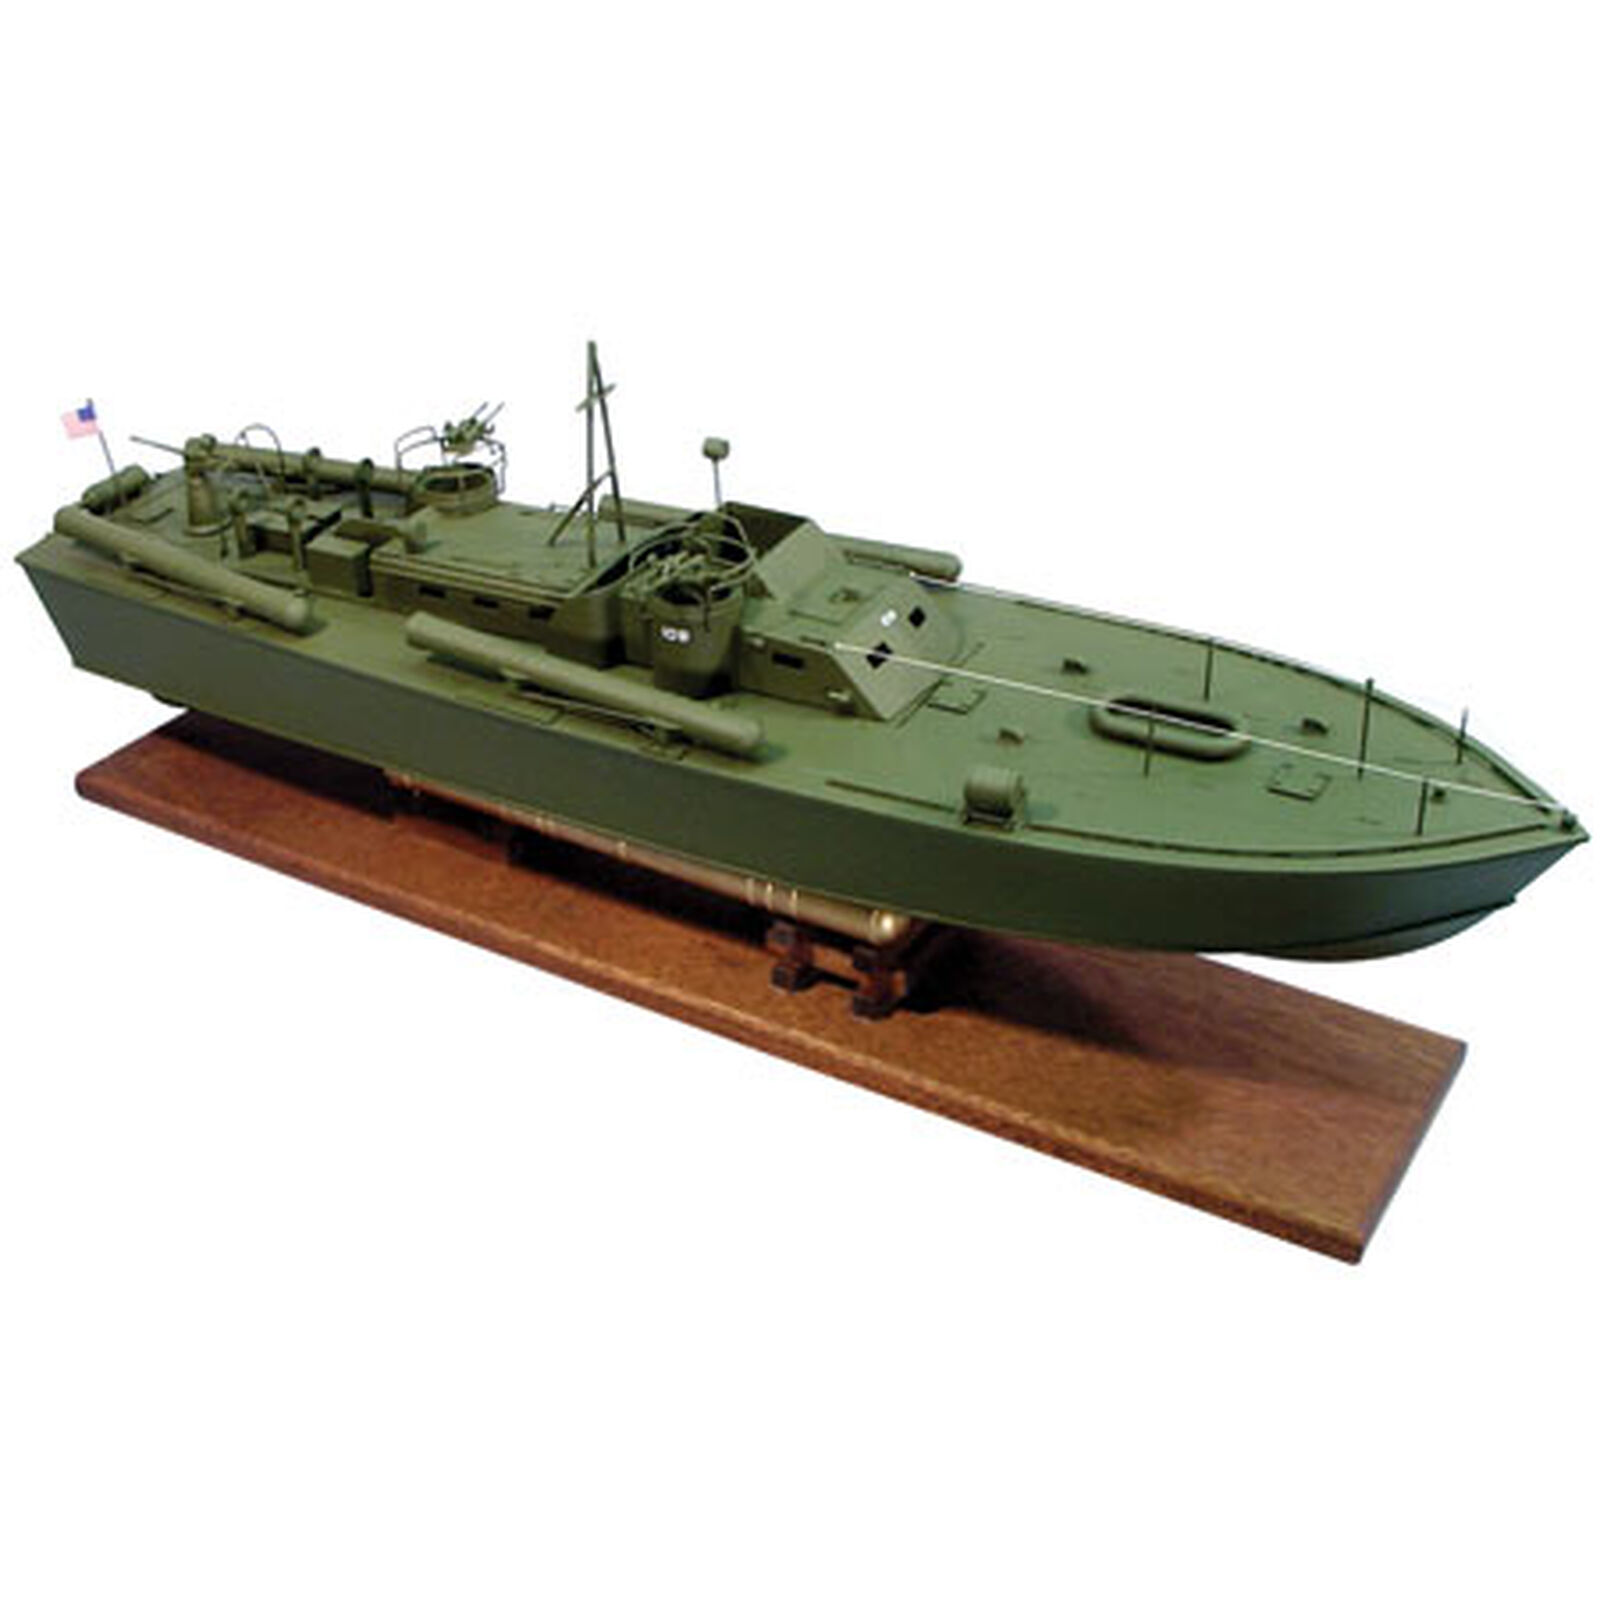 Dumas Products, Inc. 1/30 U.S. Navy PT-109 Boat Kit, 33